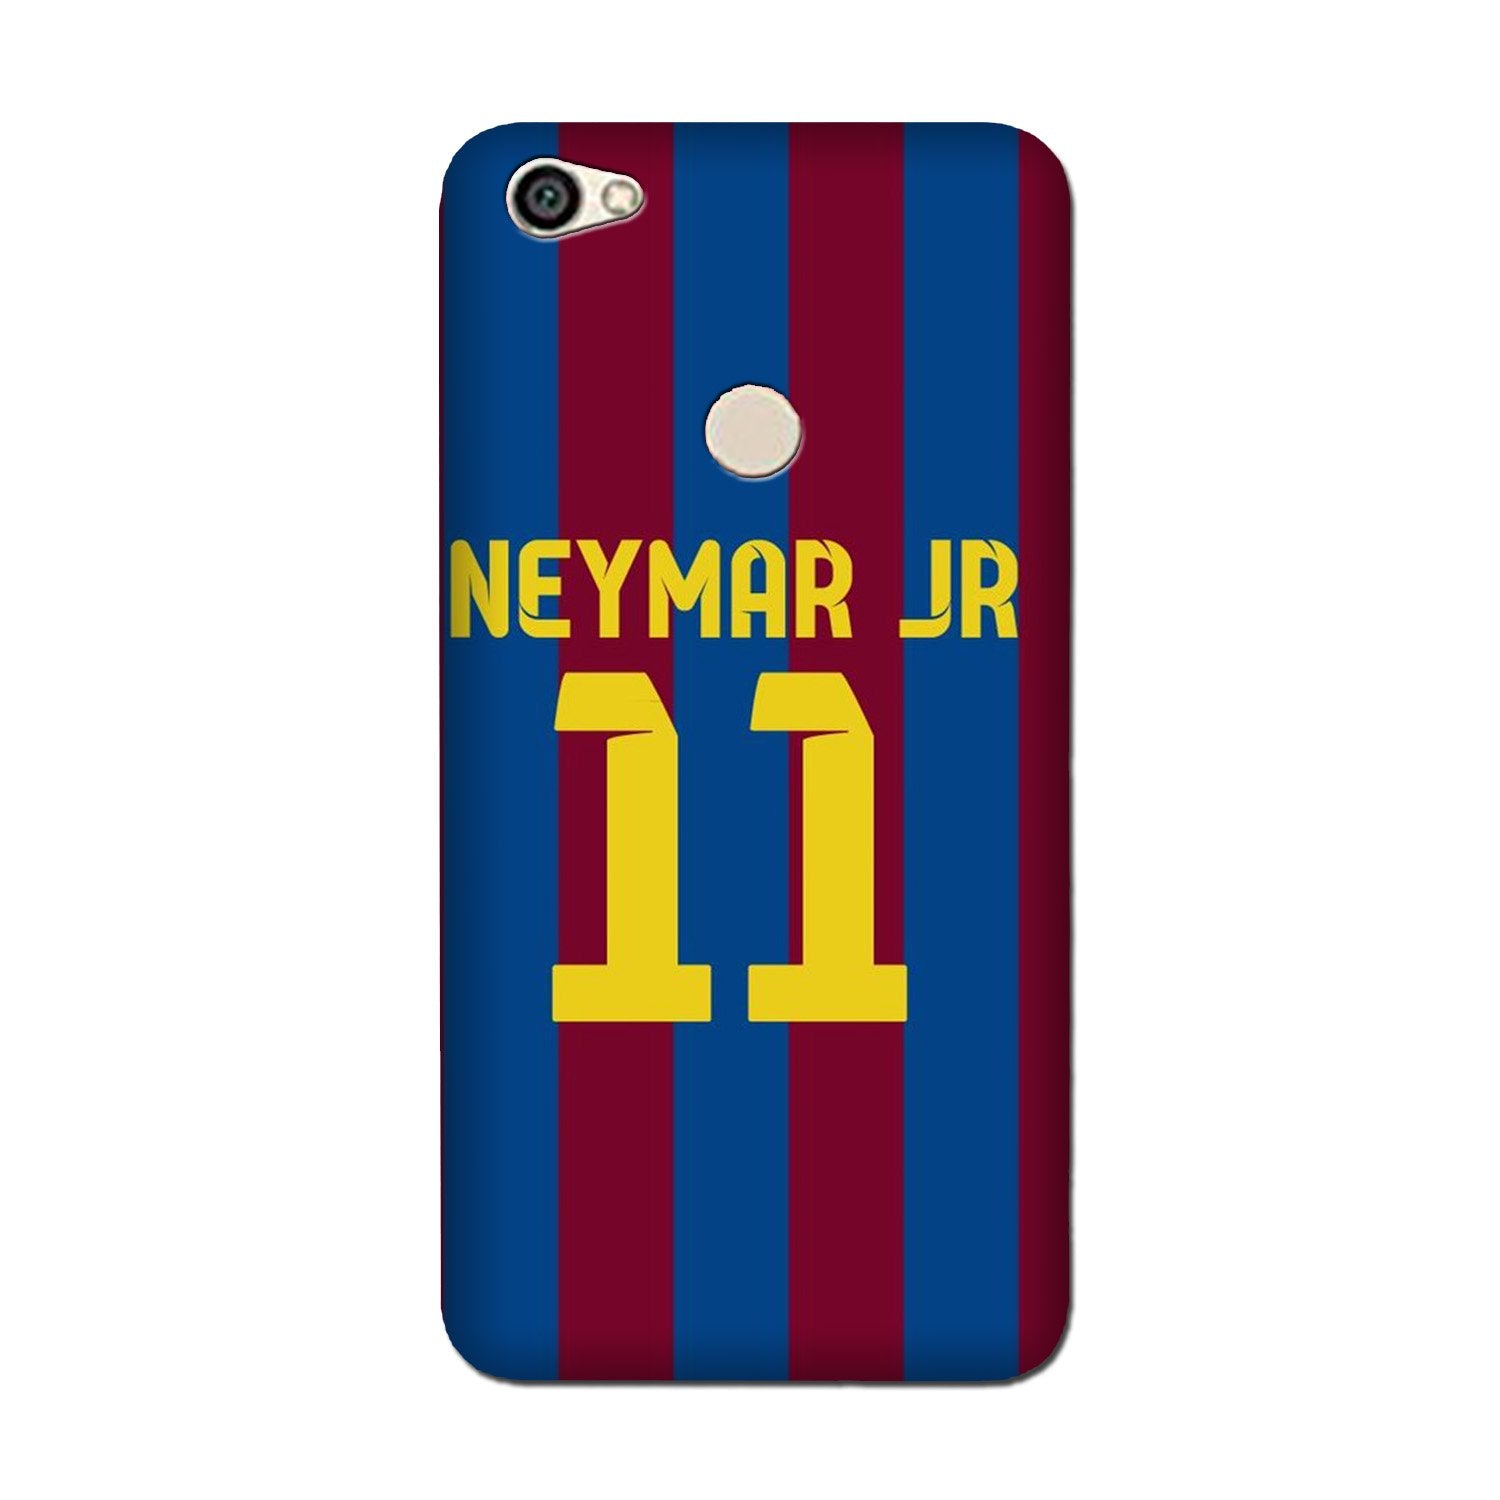 Neymar Jr Case for Redmi Y1  (Design - 162)